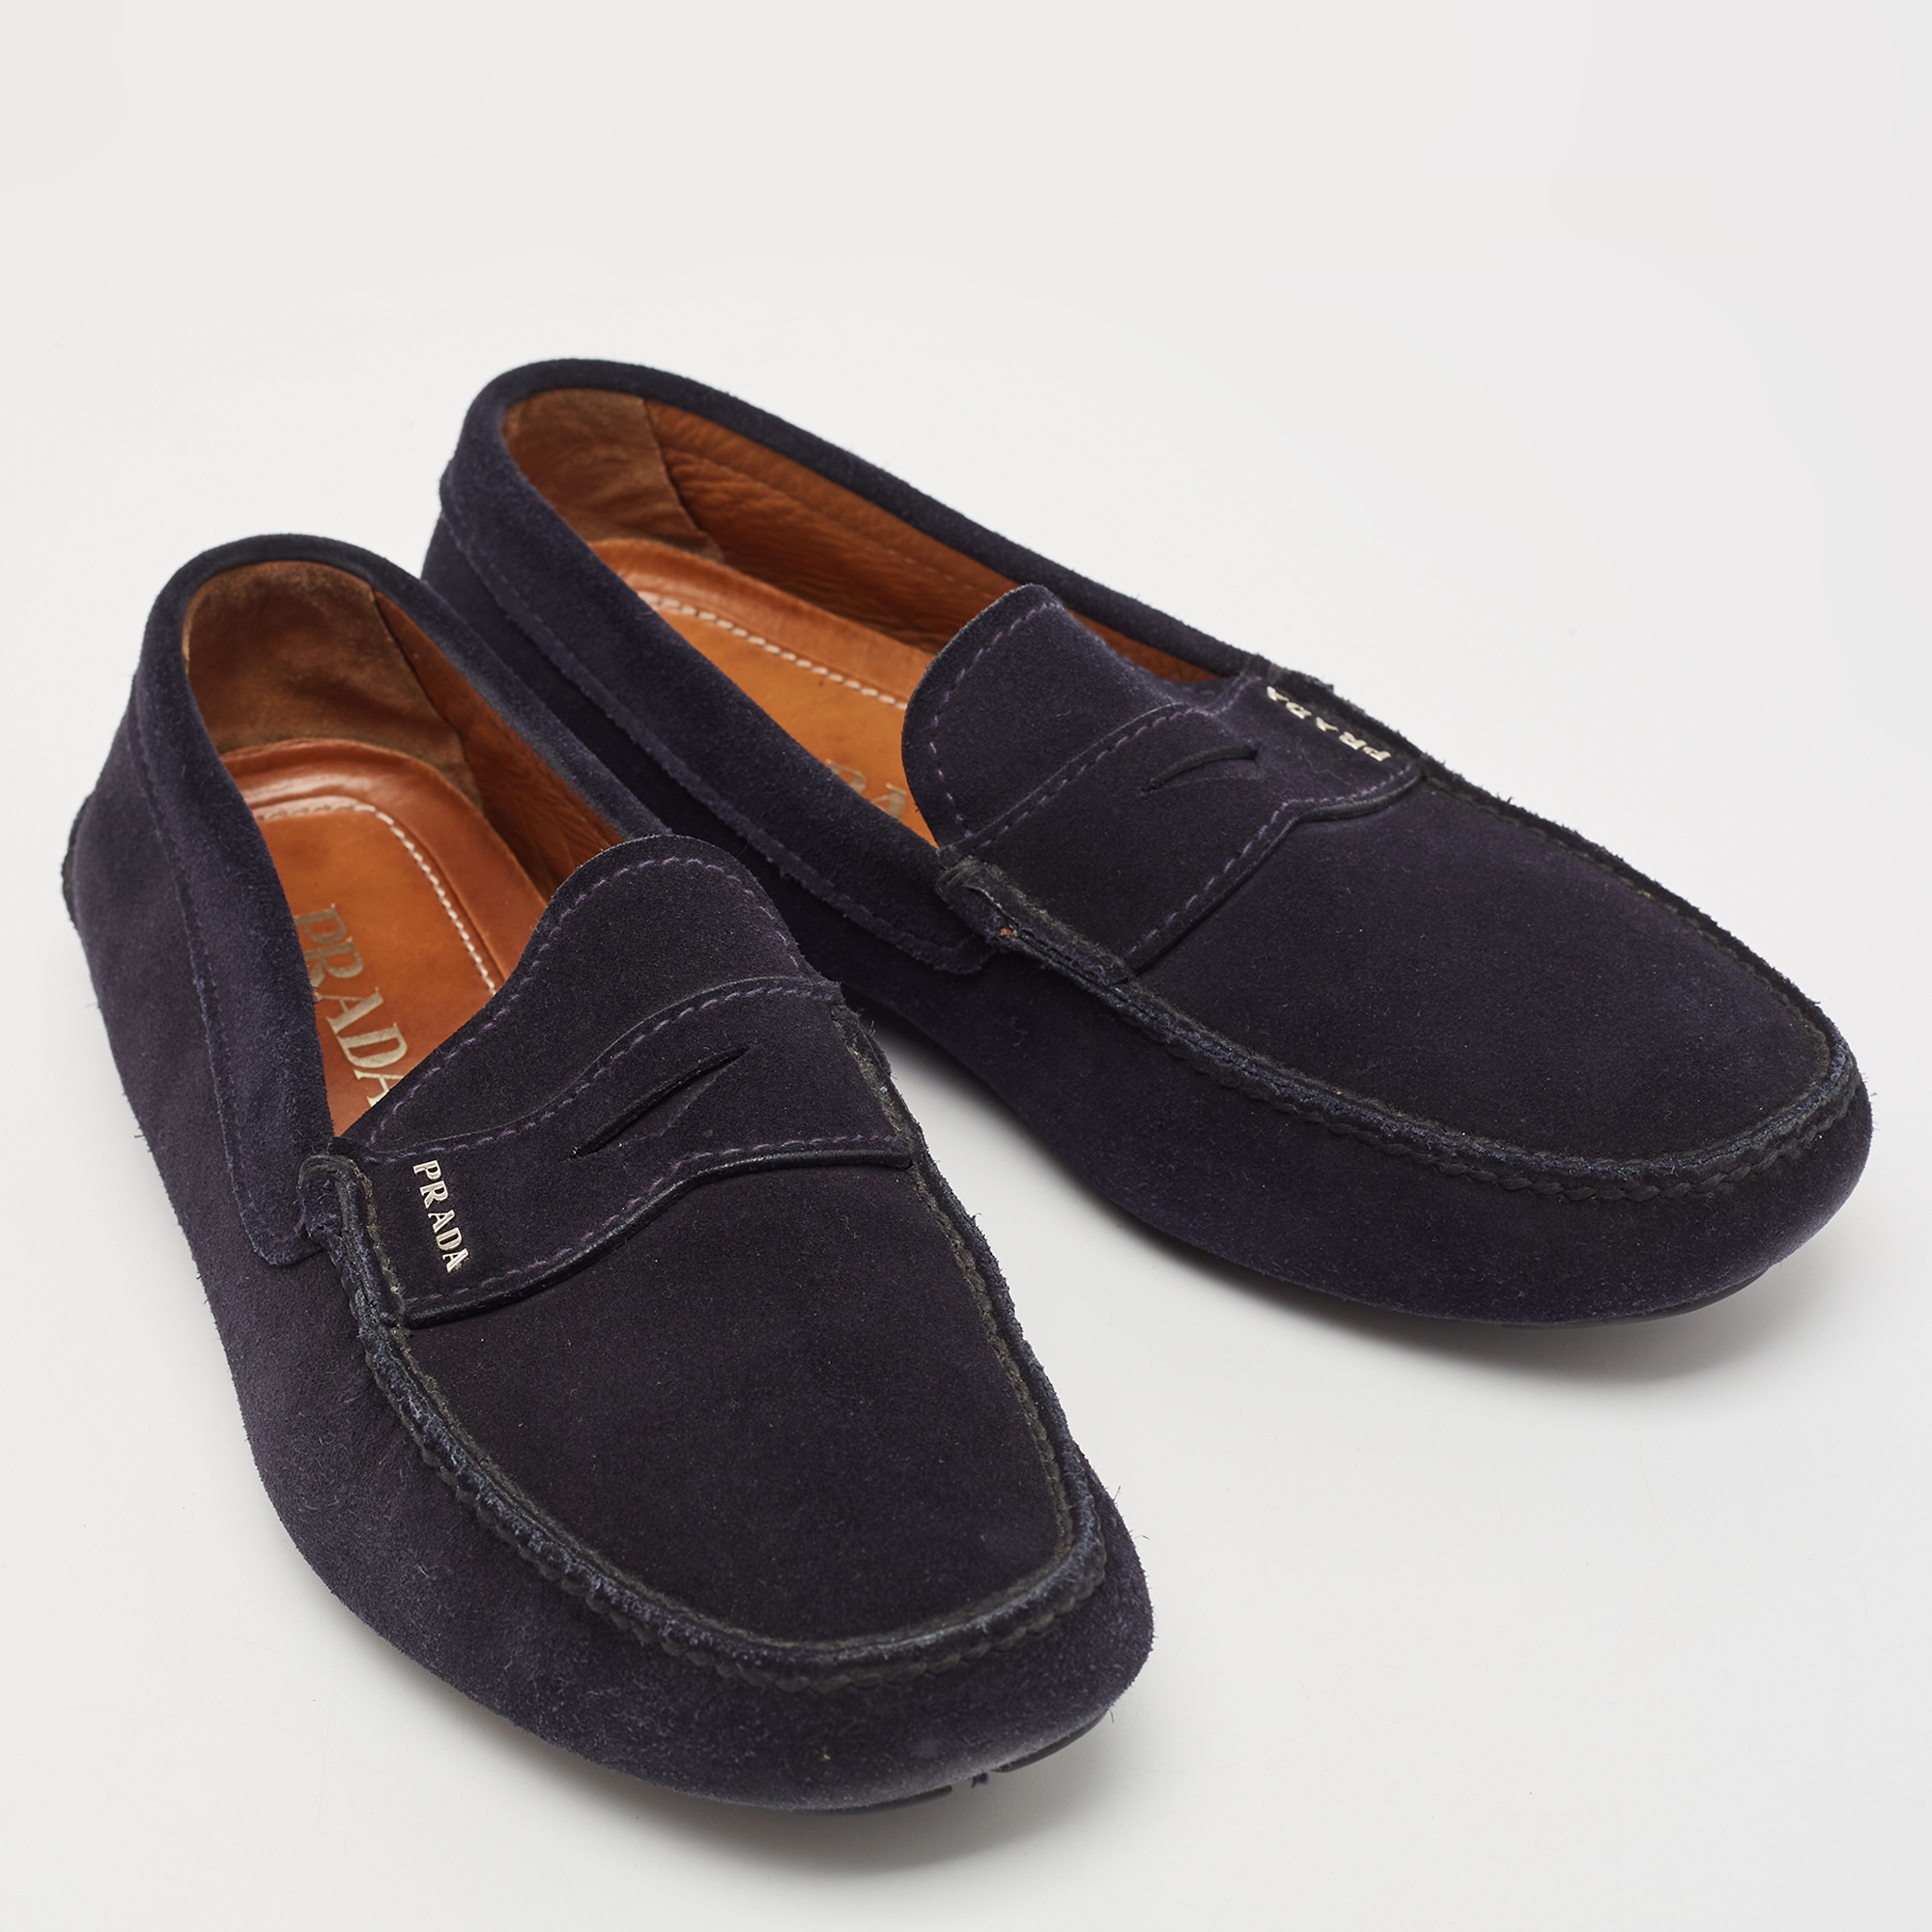 Prada Navy Blue Suede Slip On Loafers Size 41